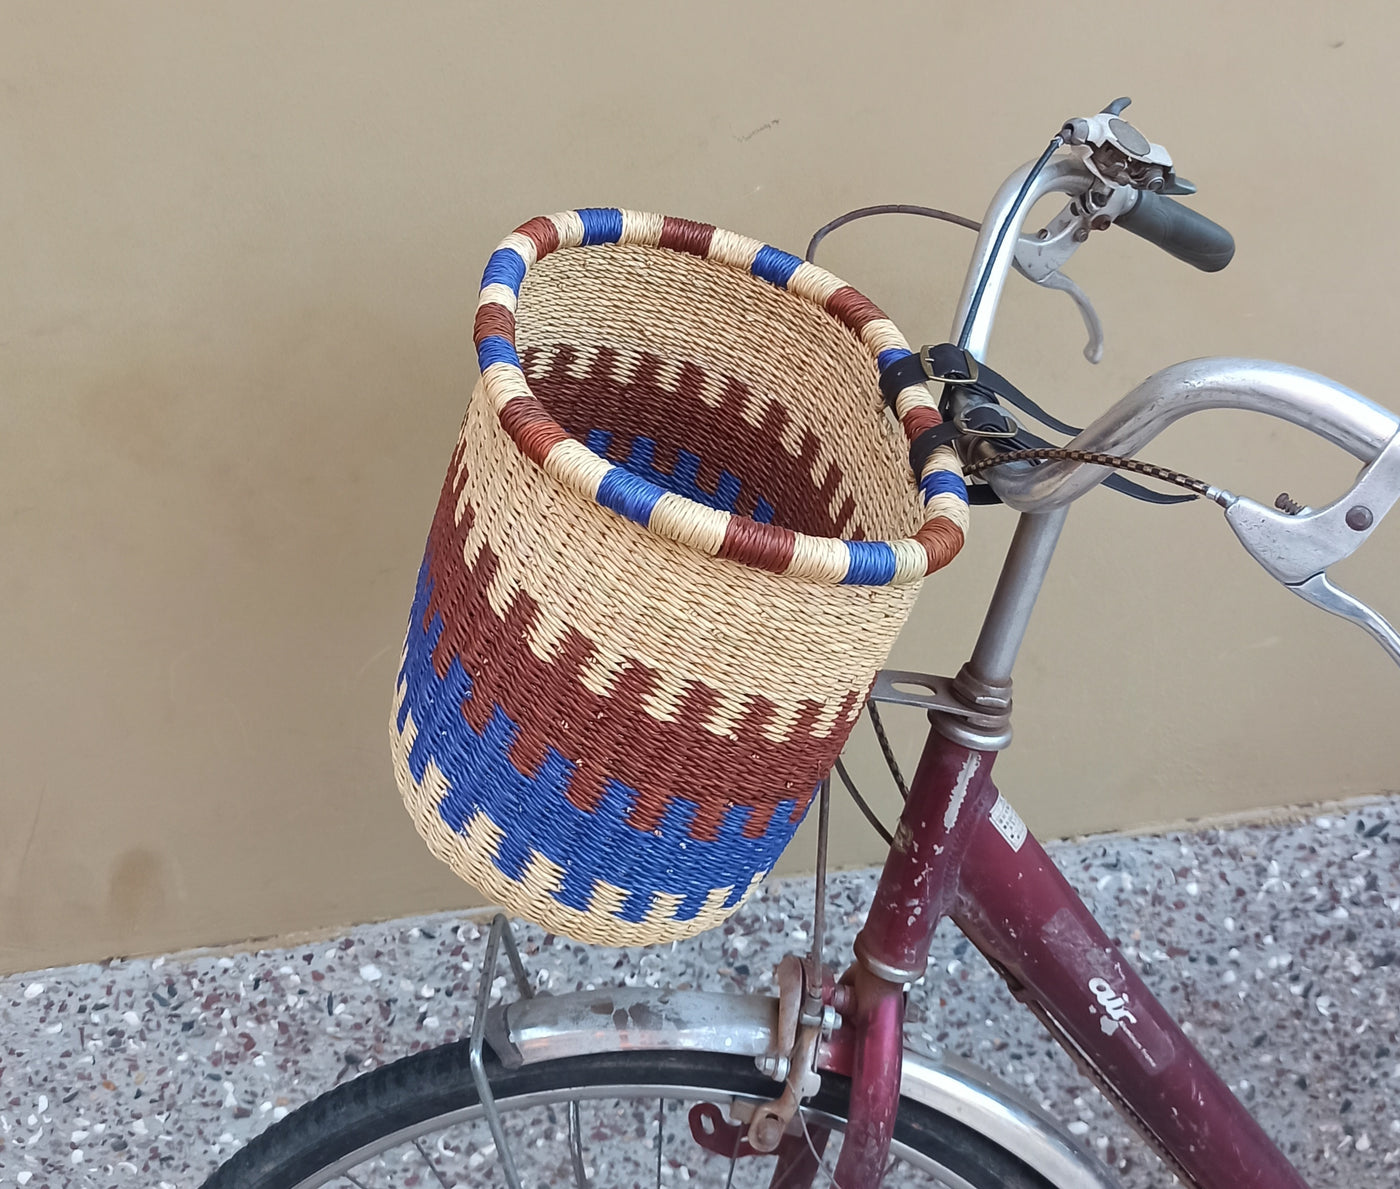 Basket For Bicycle |  Bike Basket Dog | Bike Accessories |  Bicycle Basket | Bike Basket | Bike Front Basket | Bike pannier - AfricanheritageGH